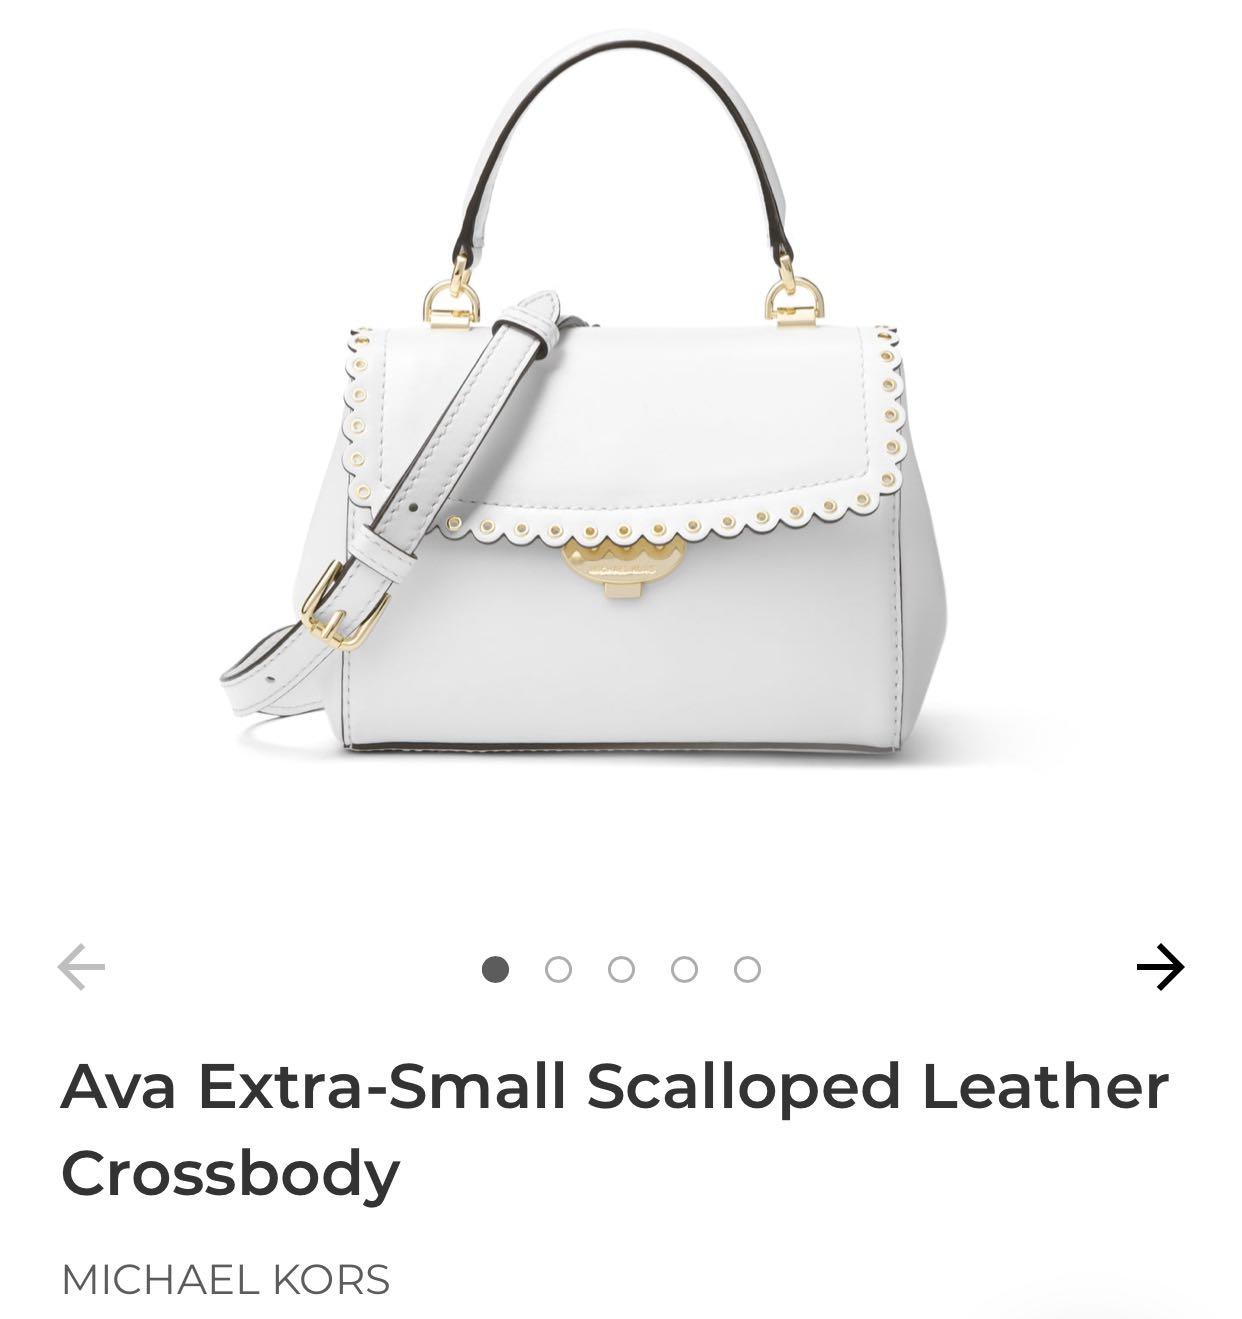 Michael Kors Ava Extra-Small Scalloped Leather Crossbody- Black